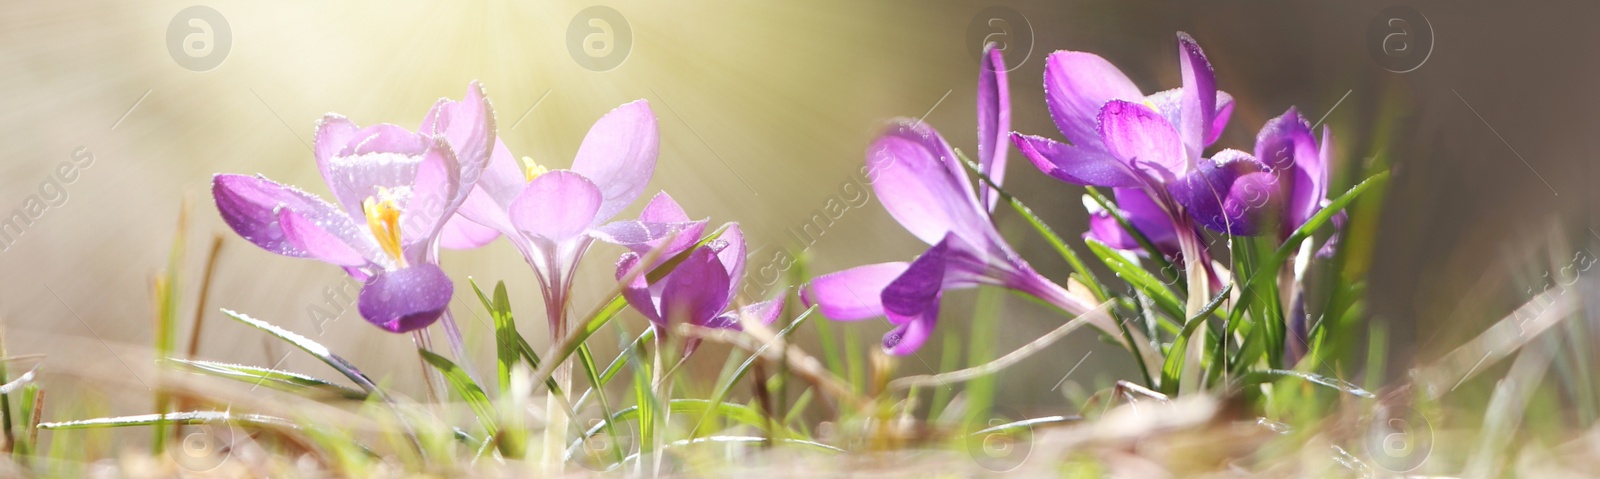 Image of Beautiful purple crocus flowers growing outdoors. Banner design 